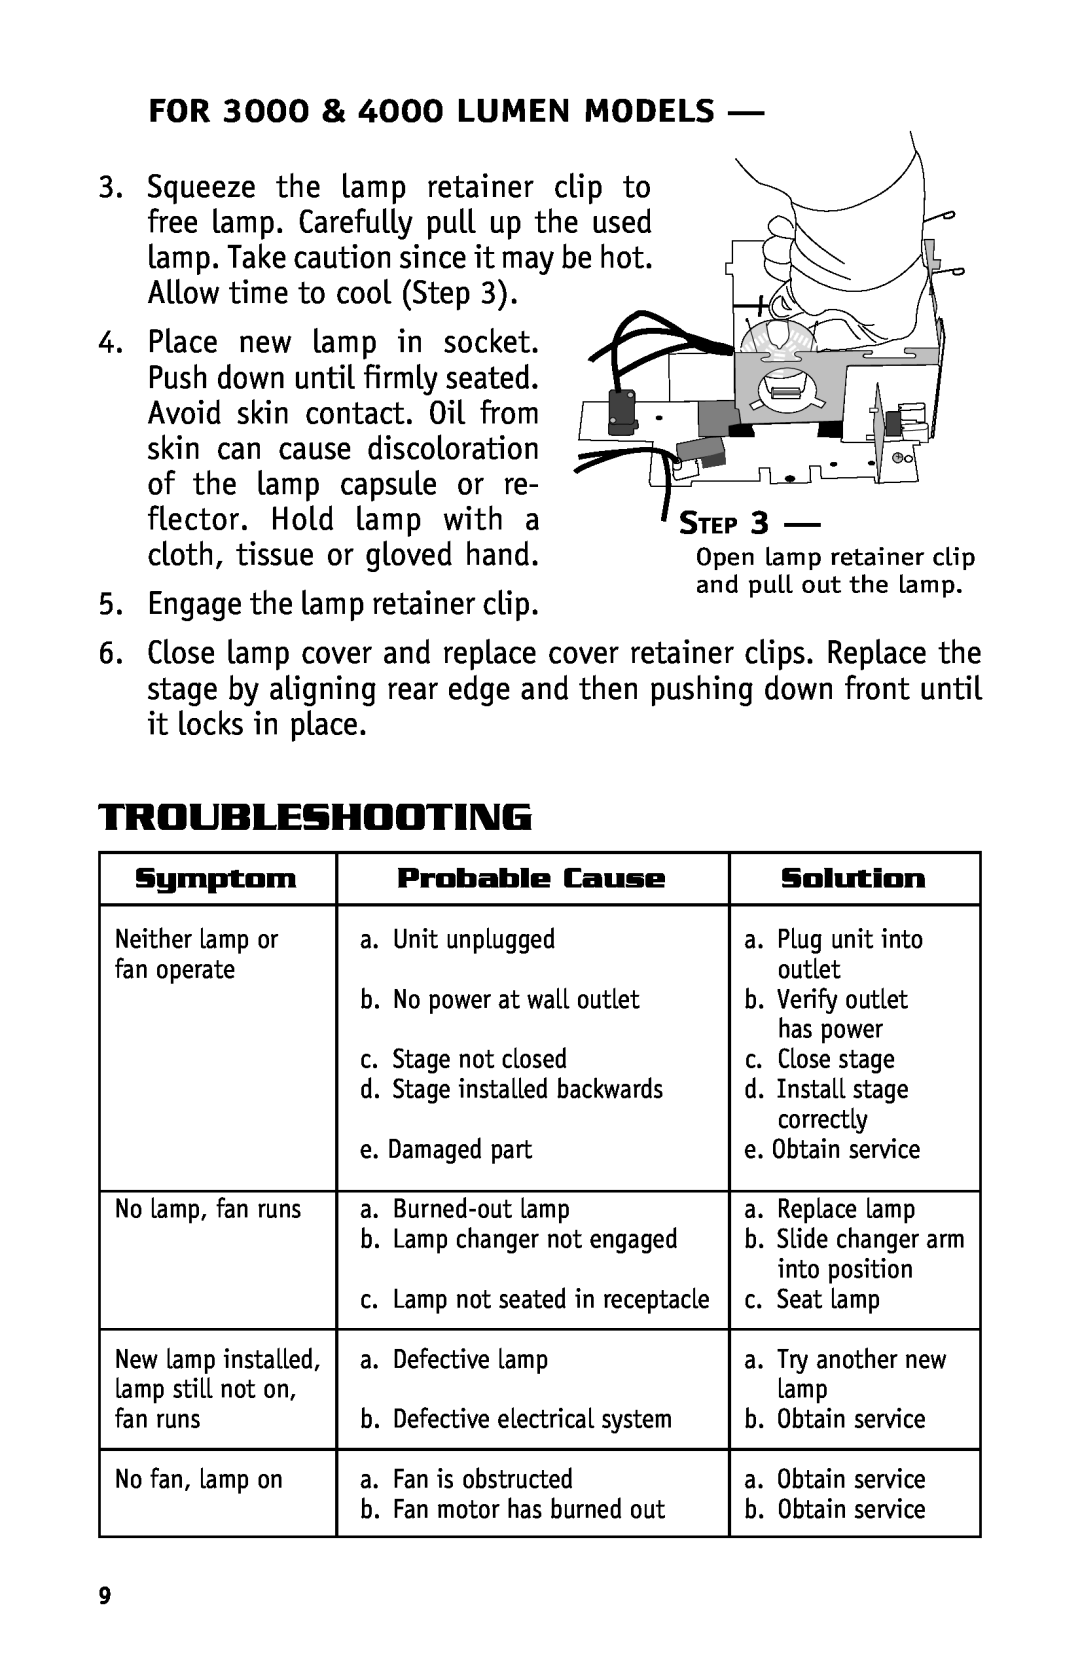 Dukane Projectors manual Troubleshooting, FOR 3000 & 4000 LUMEN MODELS, Step 